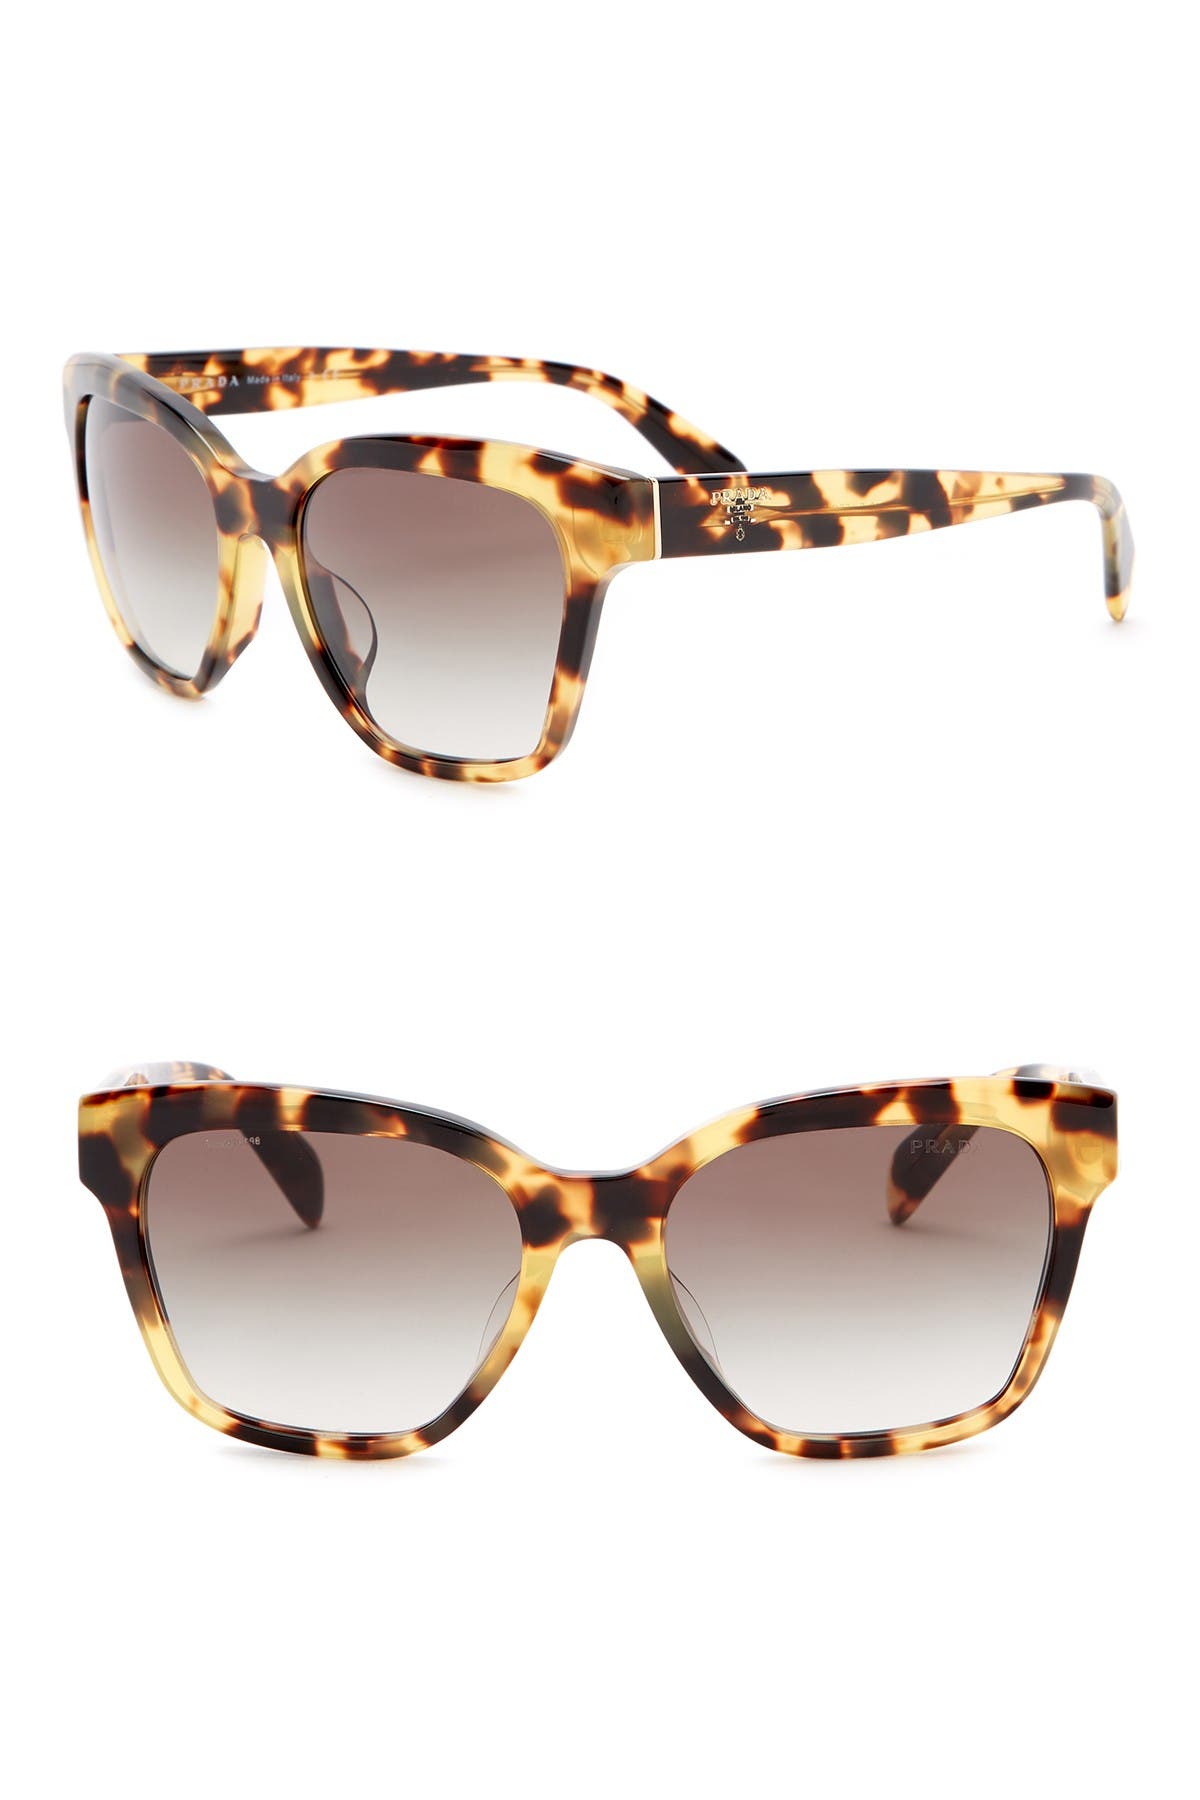 Prada | Heritage 56mm Square Sunglasses 